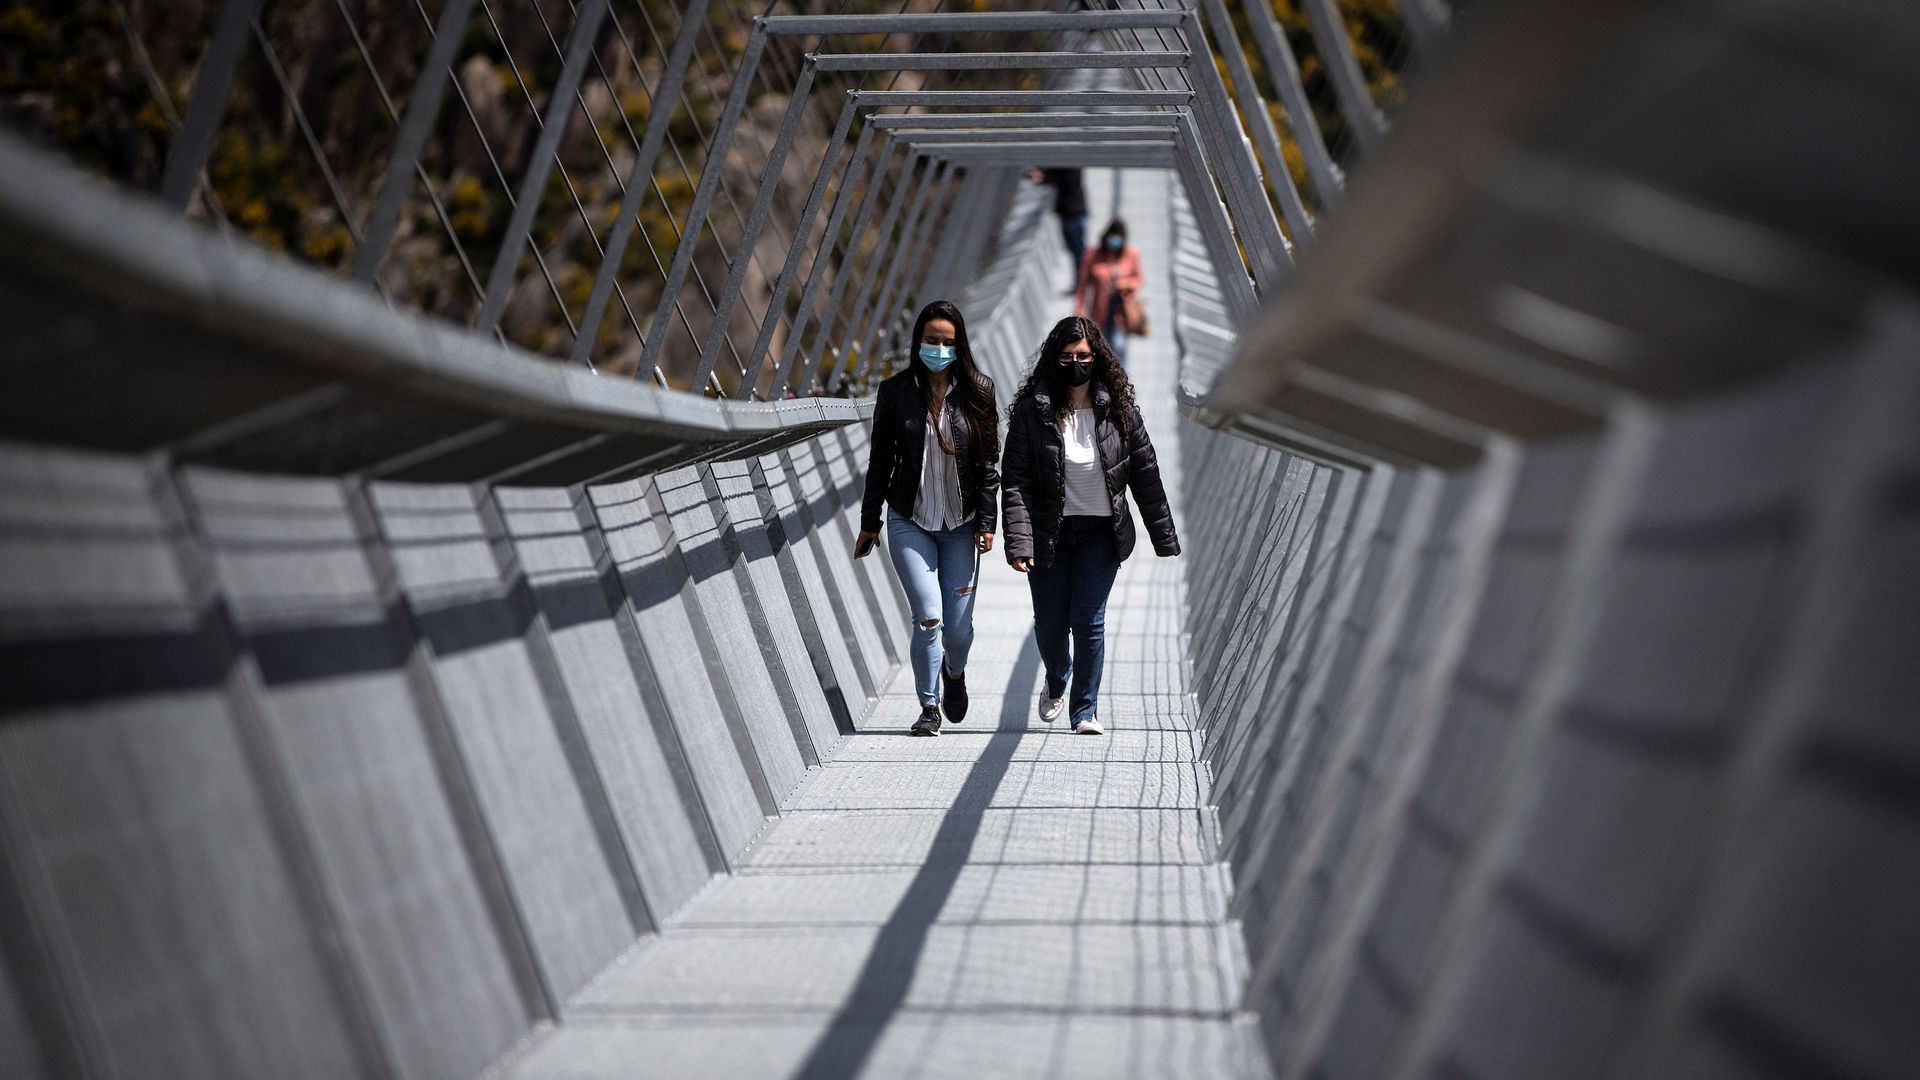 Picture of two women walking on the world's longest pedestrian suspension bridge